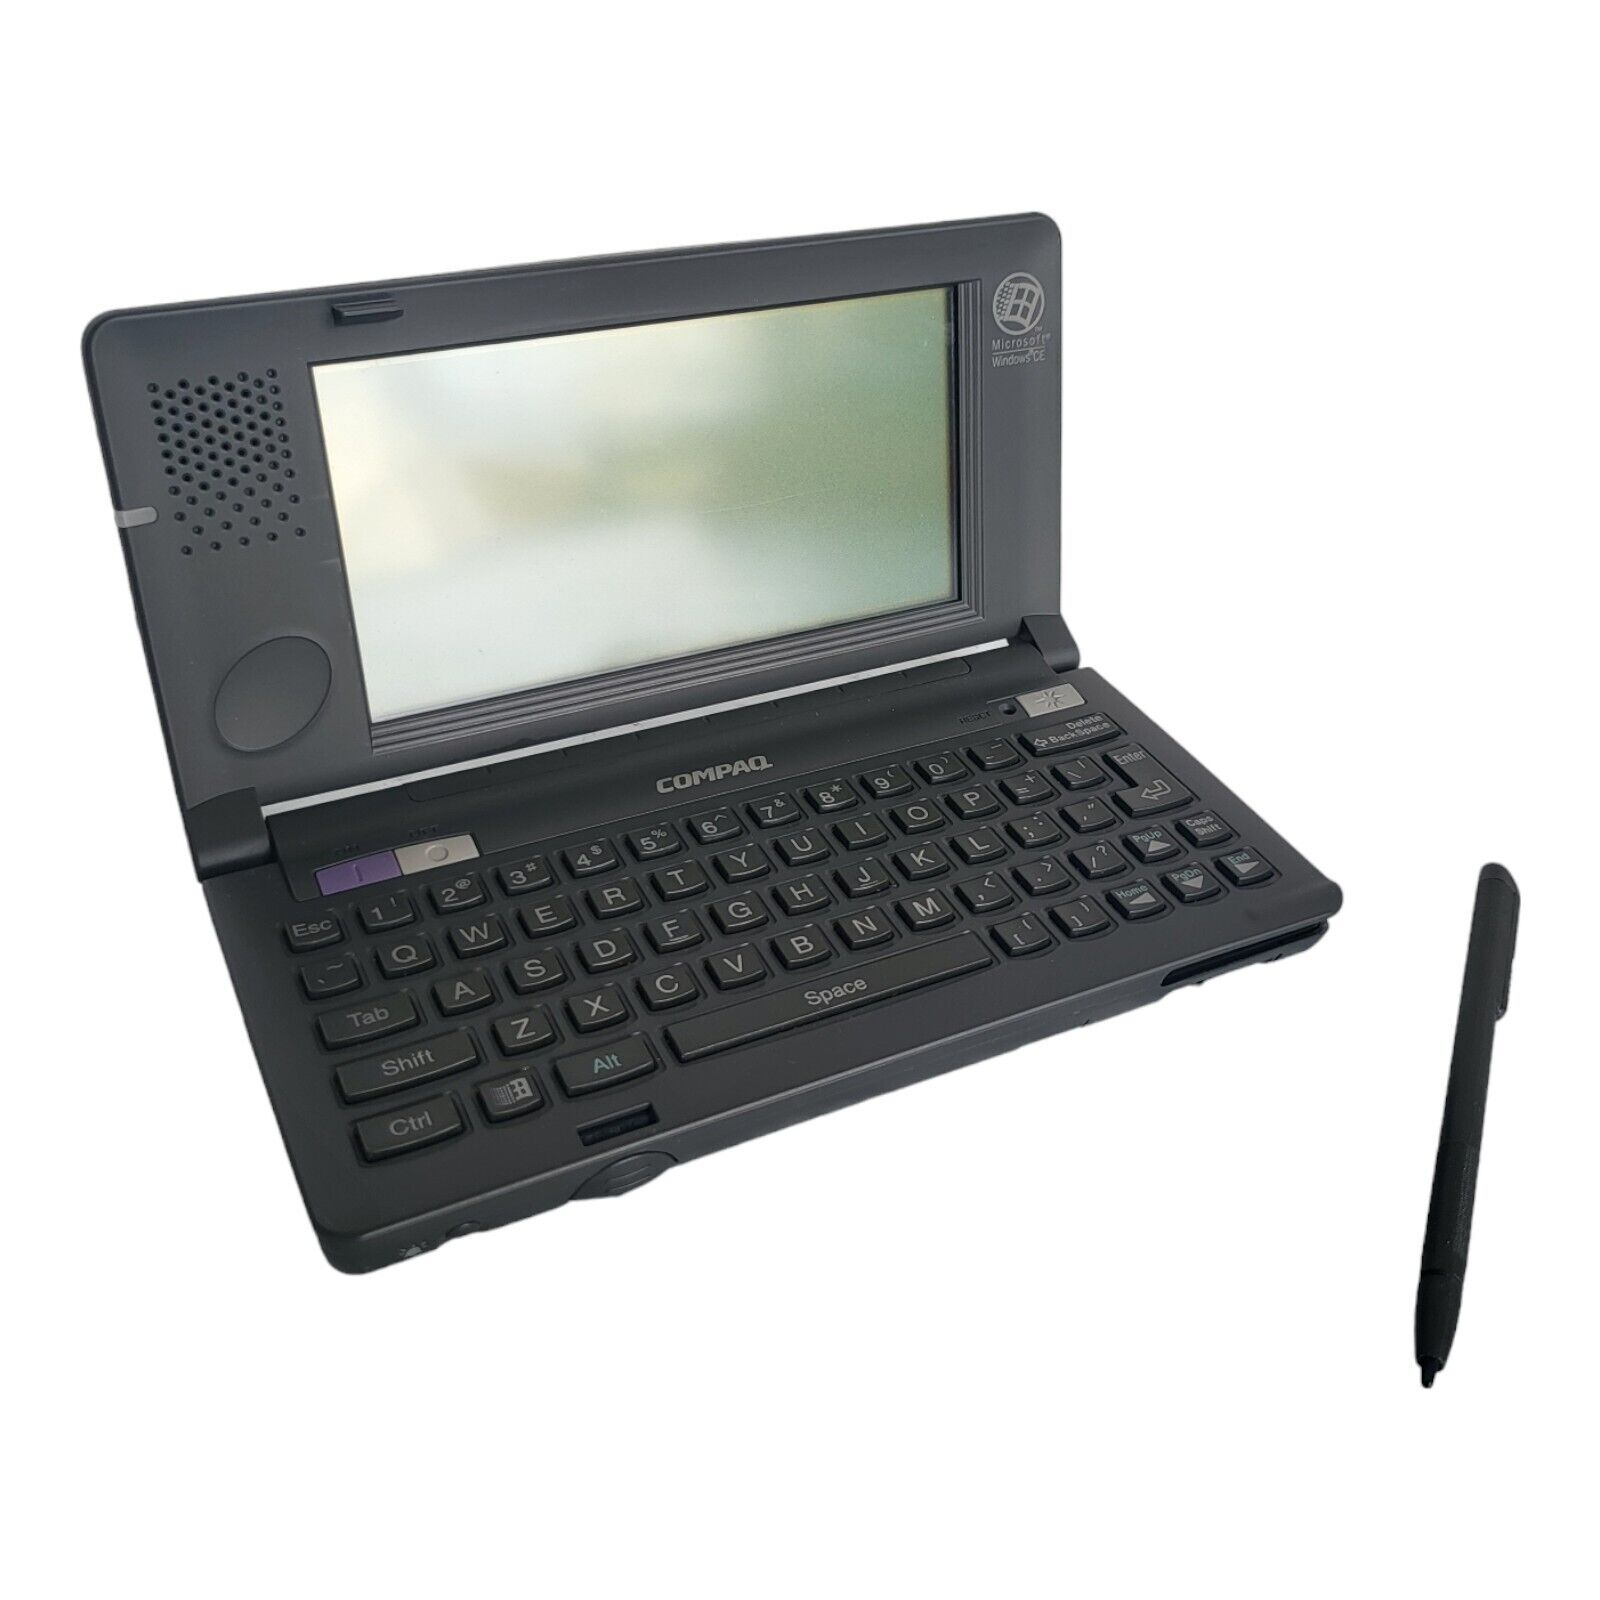 Rare Vintage COMPAQ C120+ Palmtop Mini Pocket PC PDA Retro Laptop - UNTESTED